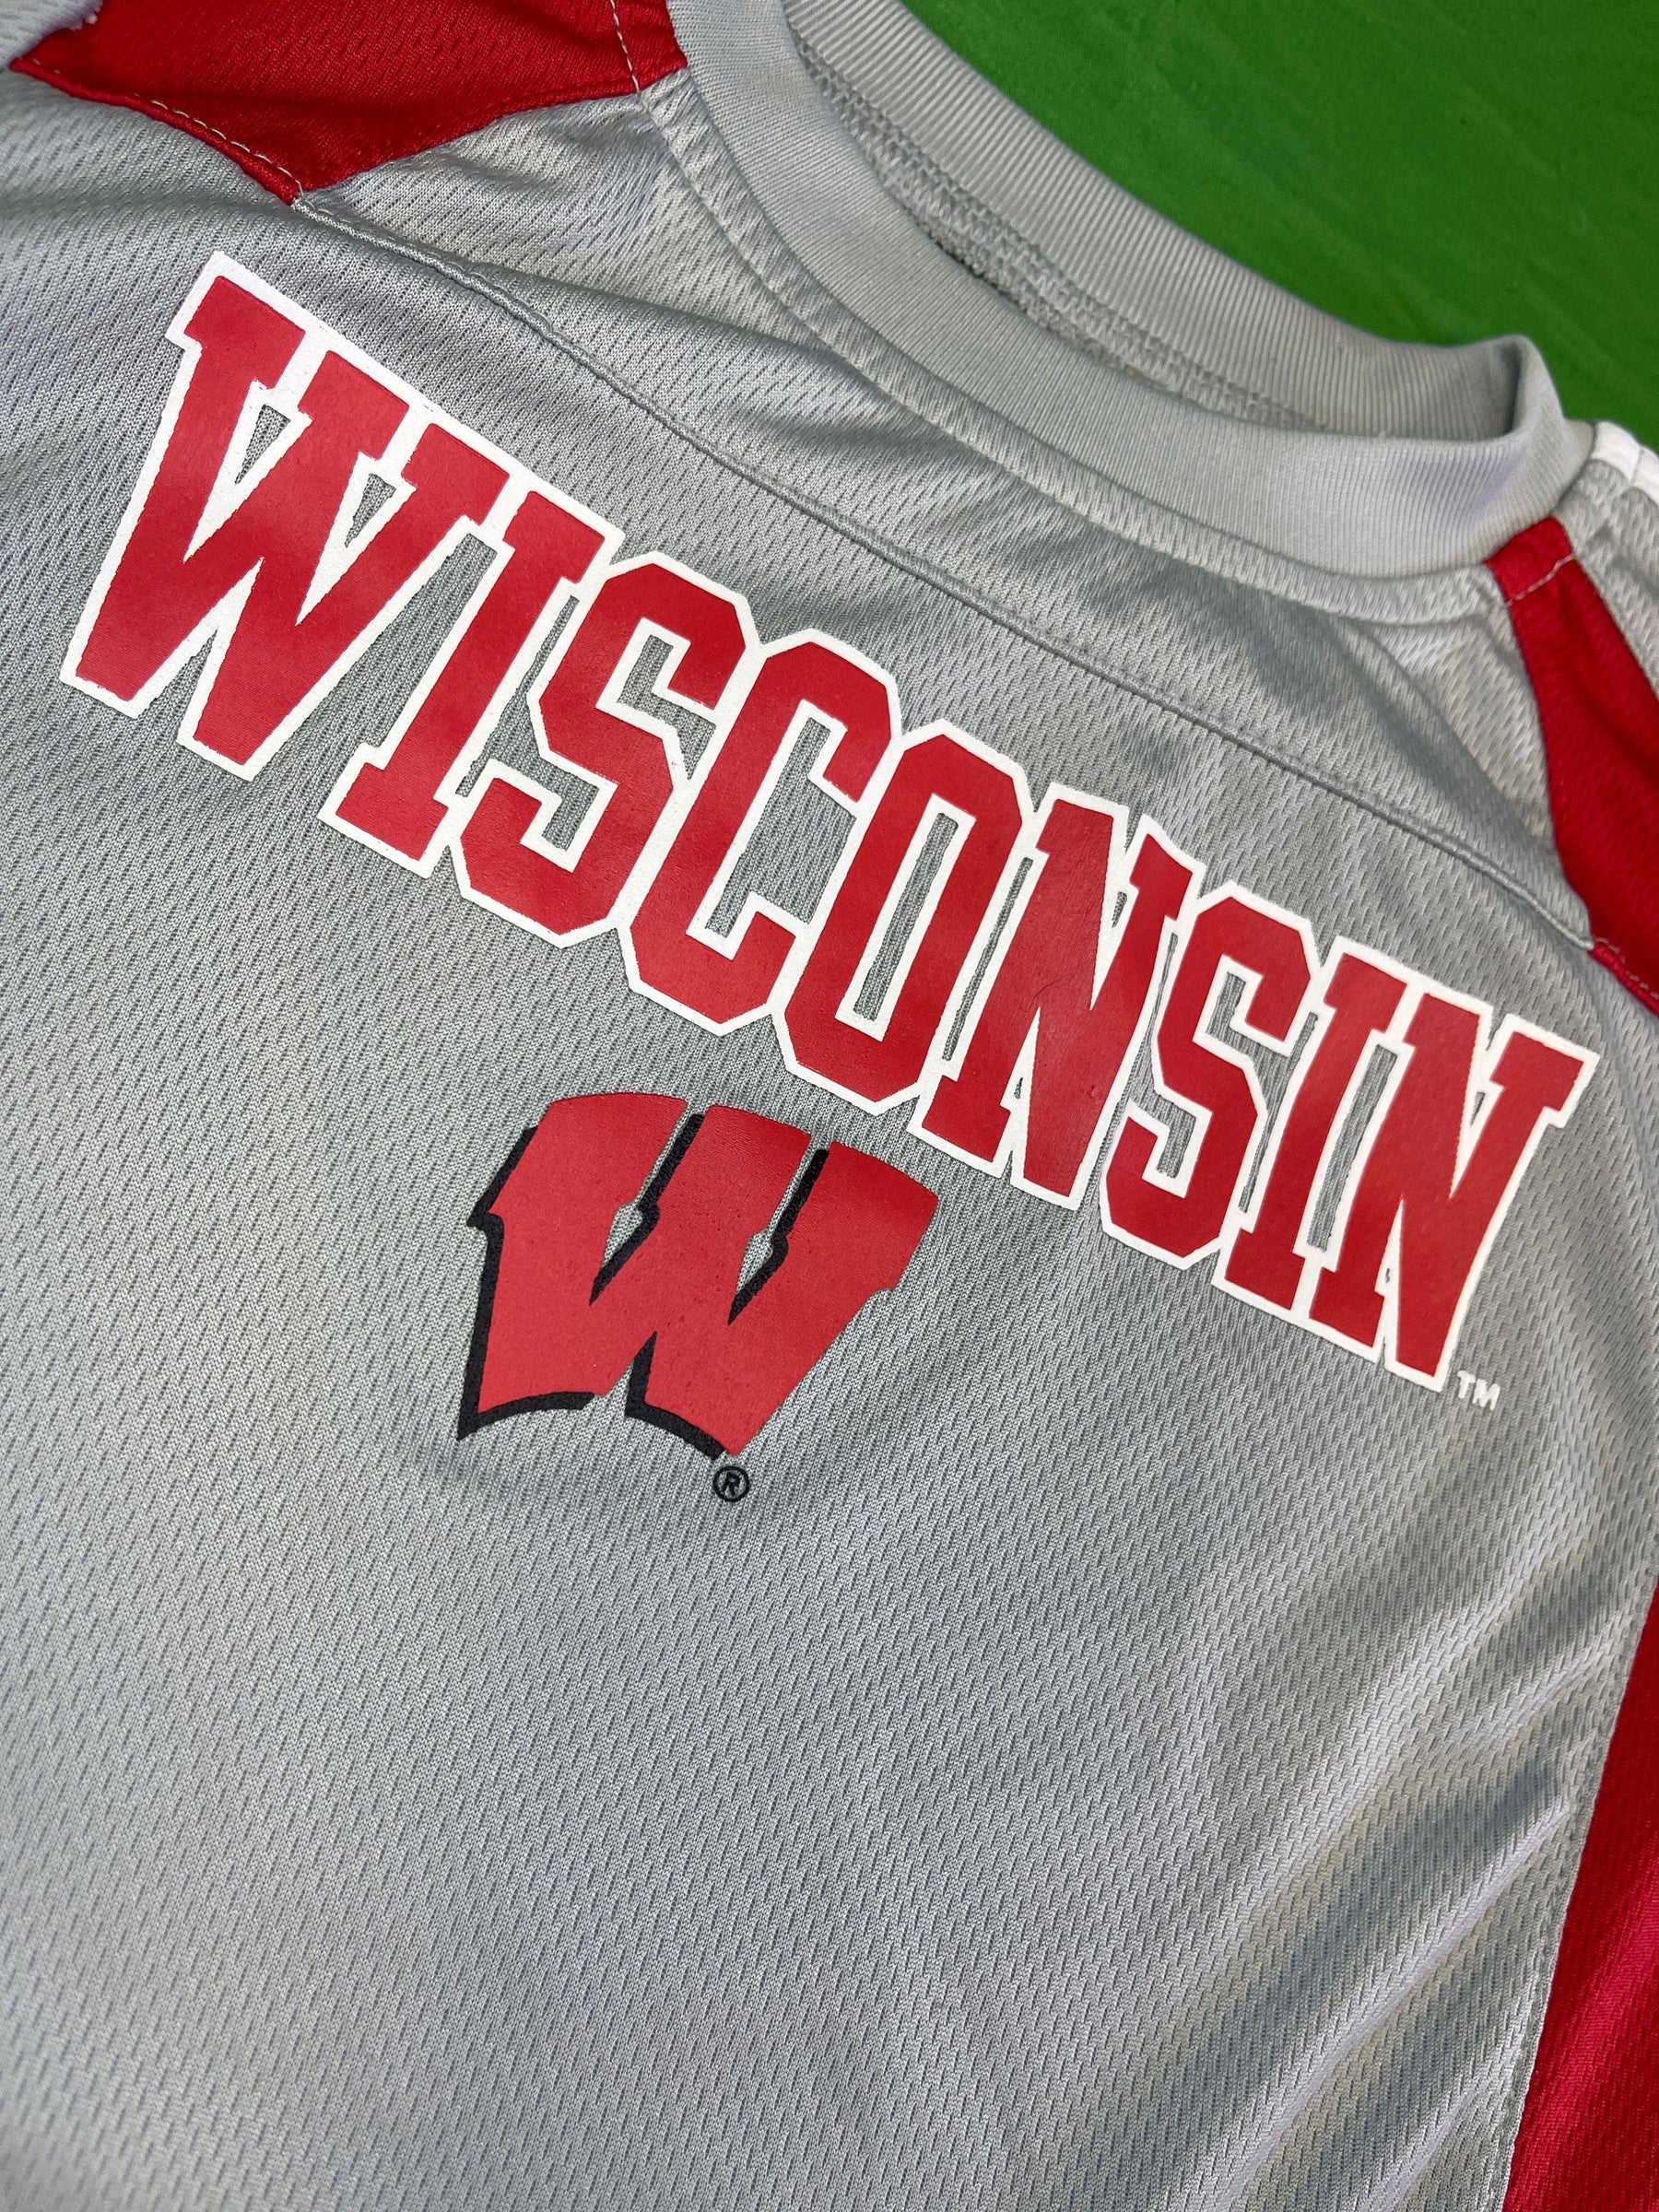 NCAA Wisconsin Badgers Grey Jersey 24 months